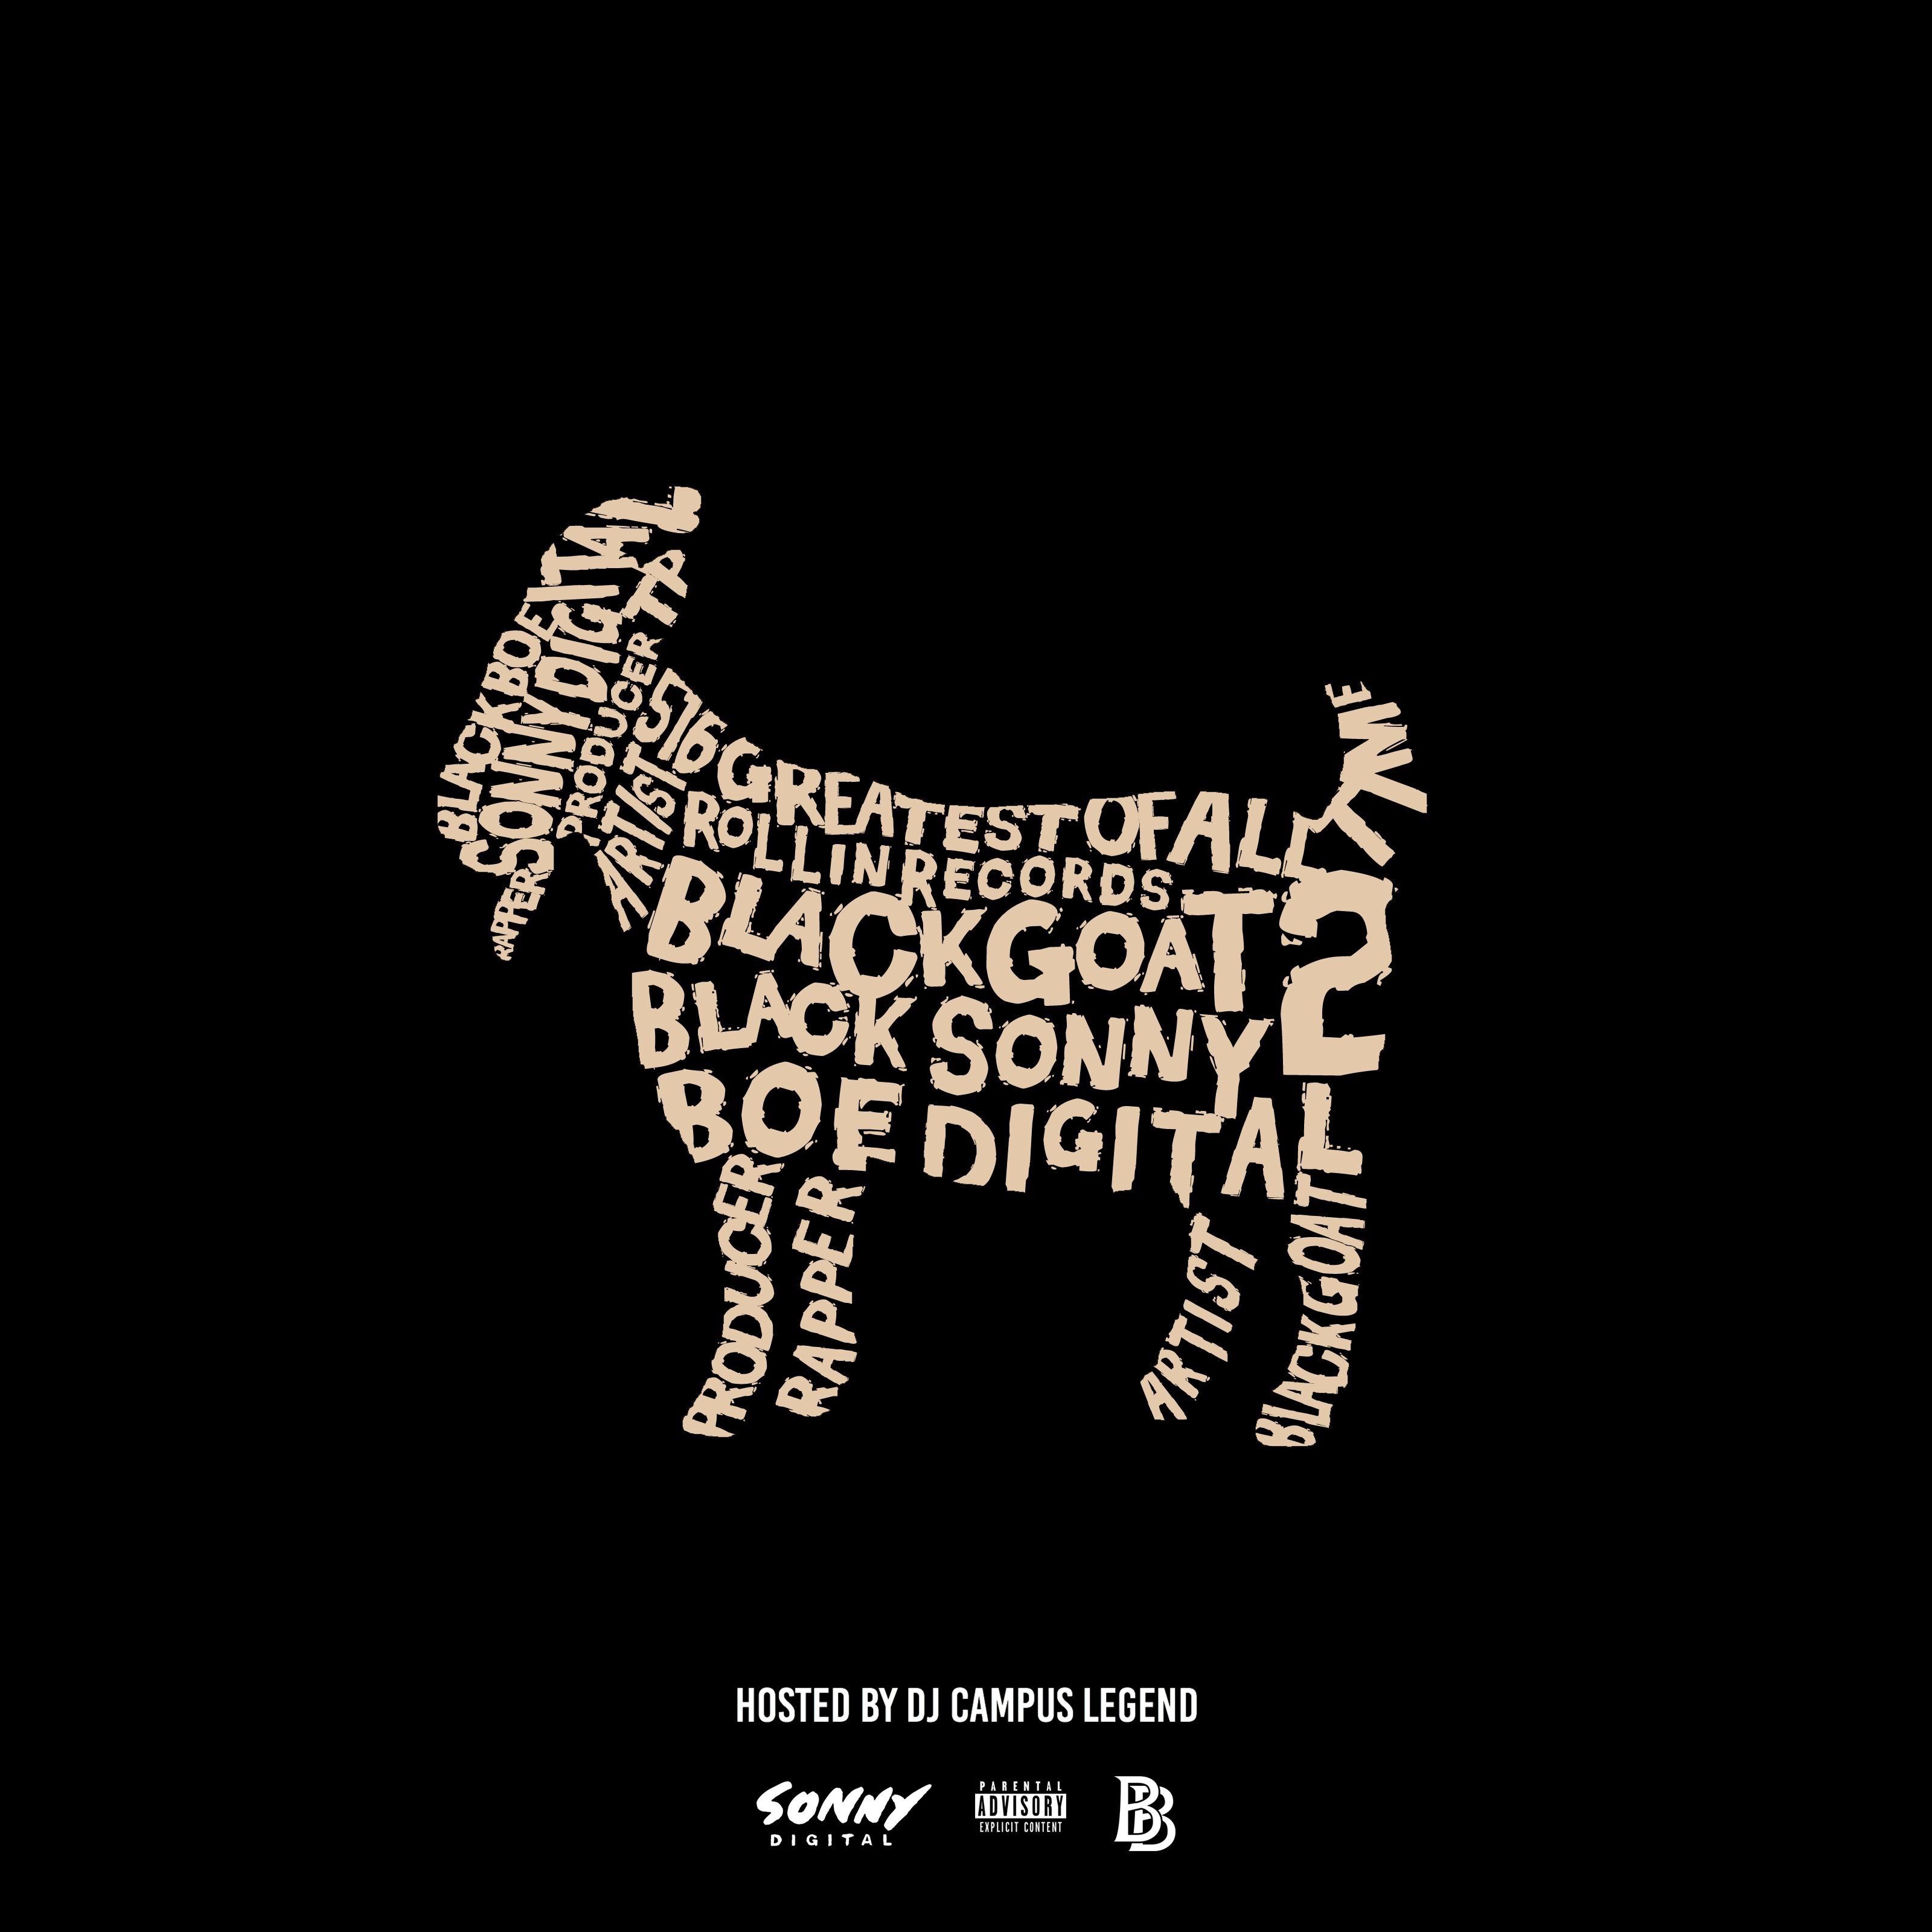 Black Goat 2 - Sonny Digital x Black Boe | MixtapeMonkey.com